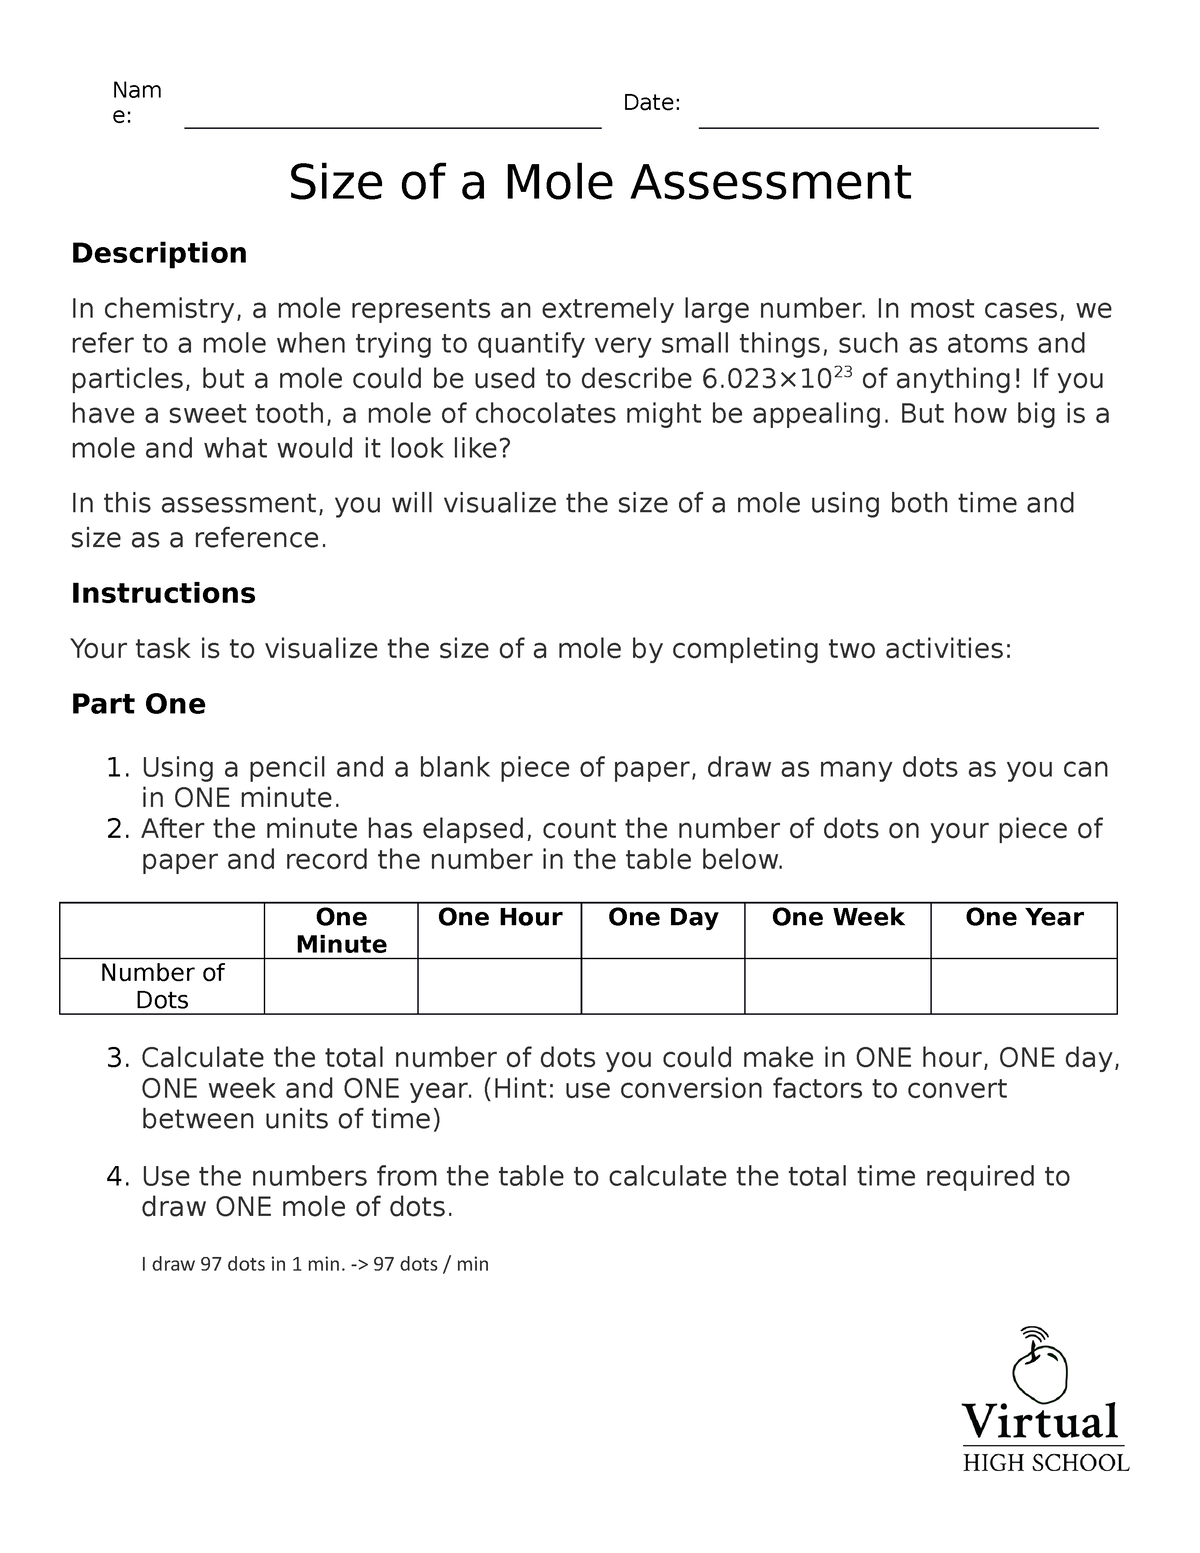 Size Of A Mole Worksheet E Date Size Of A Mole Assessment Description In Chemistry A Mole